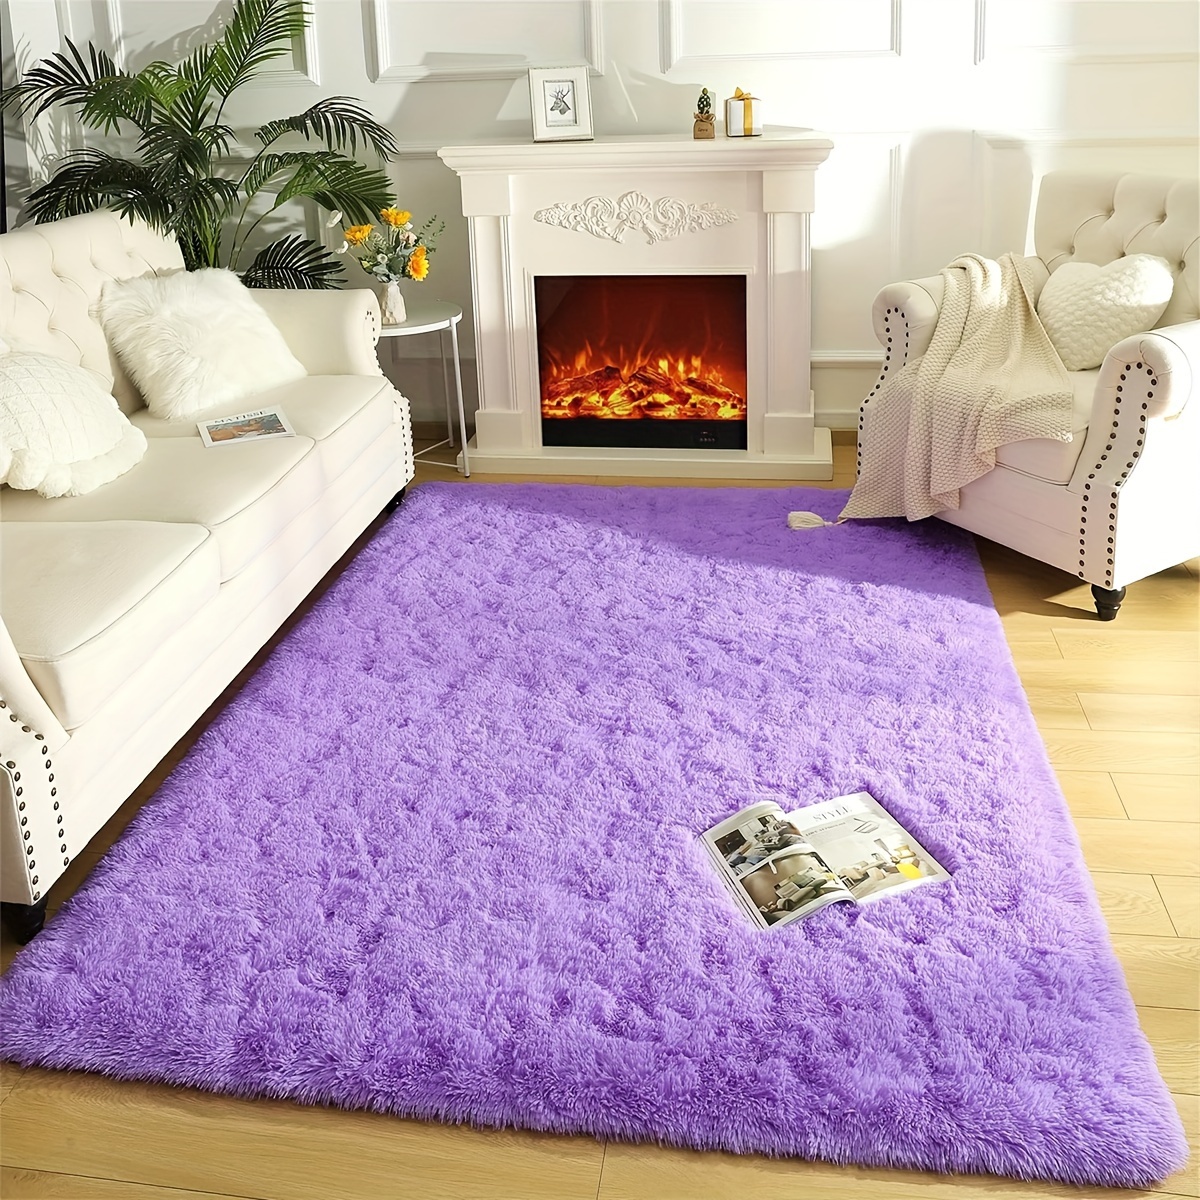 1pc purple shag indoor mat furry area rug non slip floor carpet home decor room decor home kitchen items gifts farmhouse decor